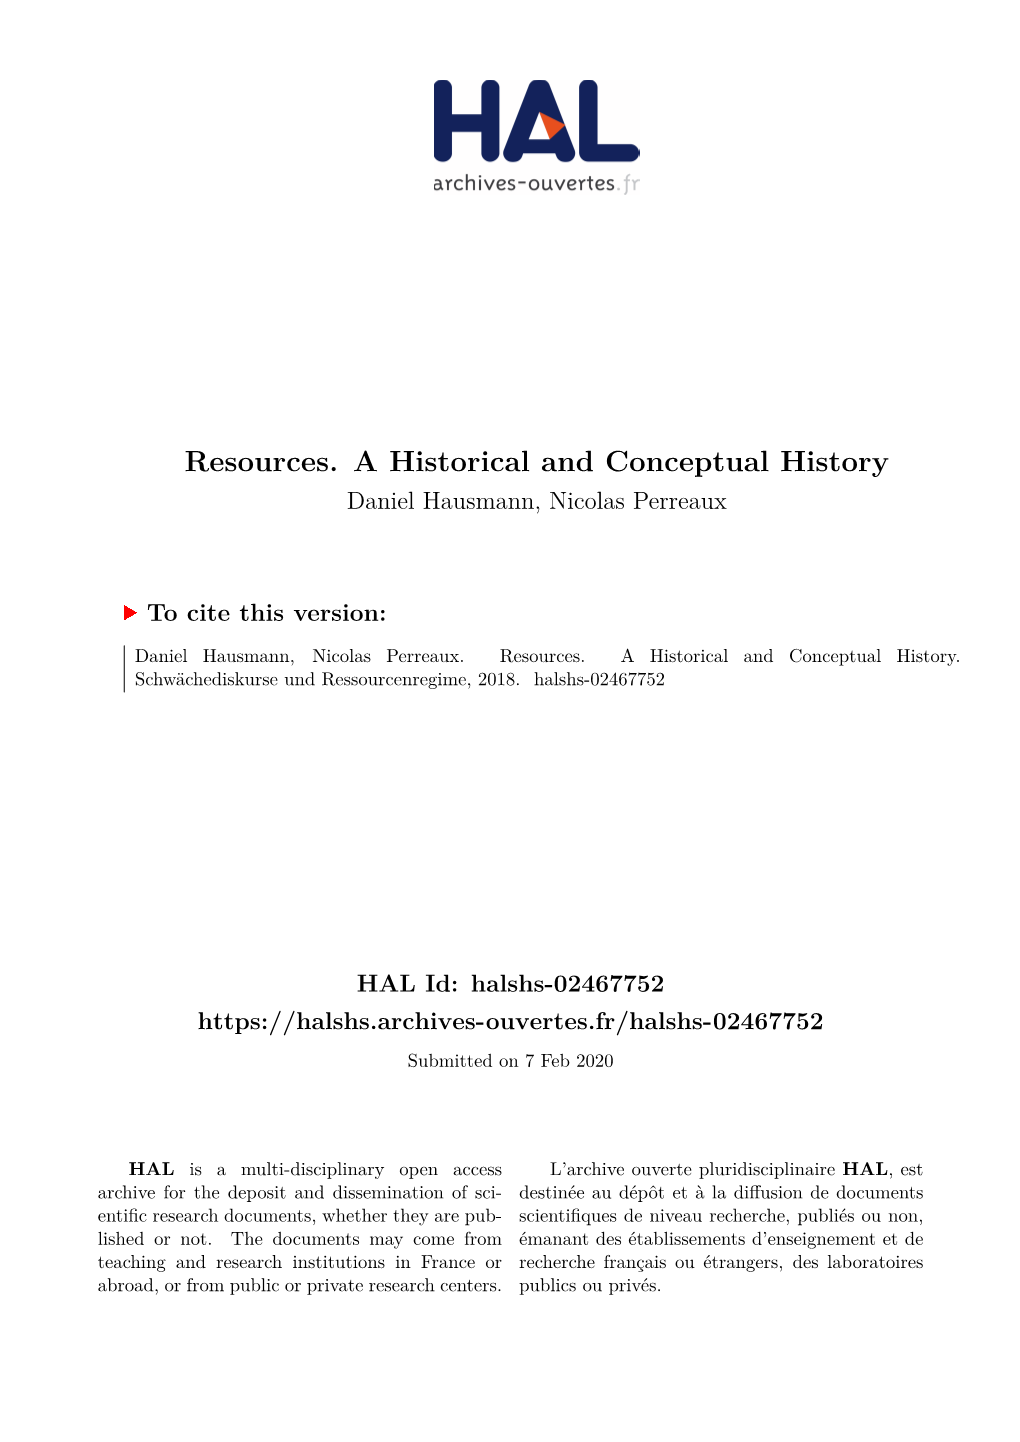 Resources. a Historical and Conceptual History Daniel Hausmann, Nicolas Perreaux